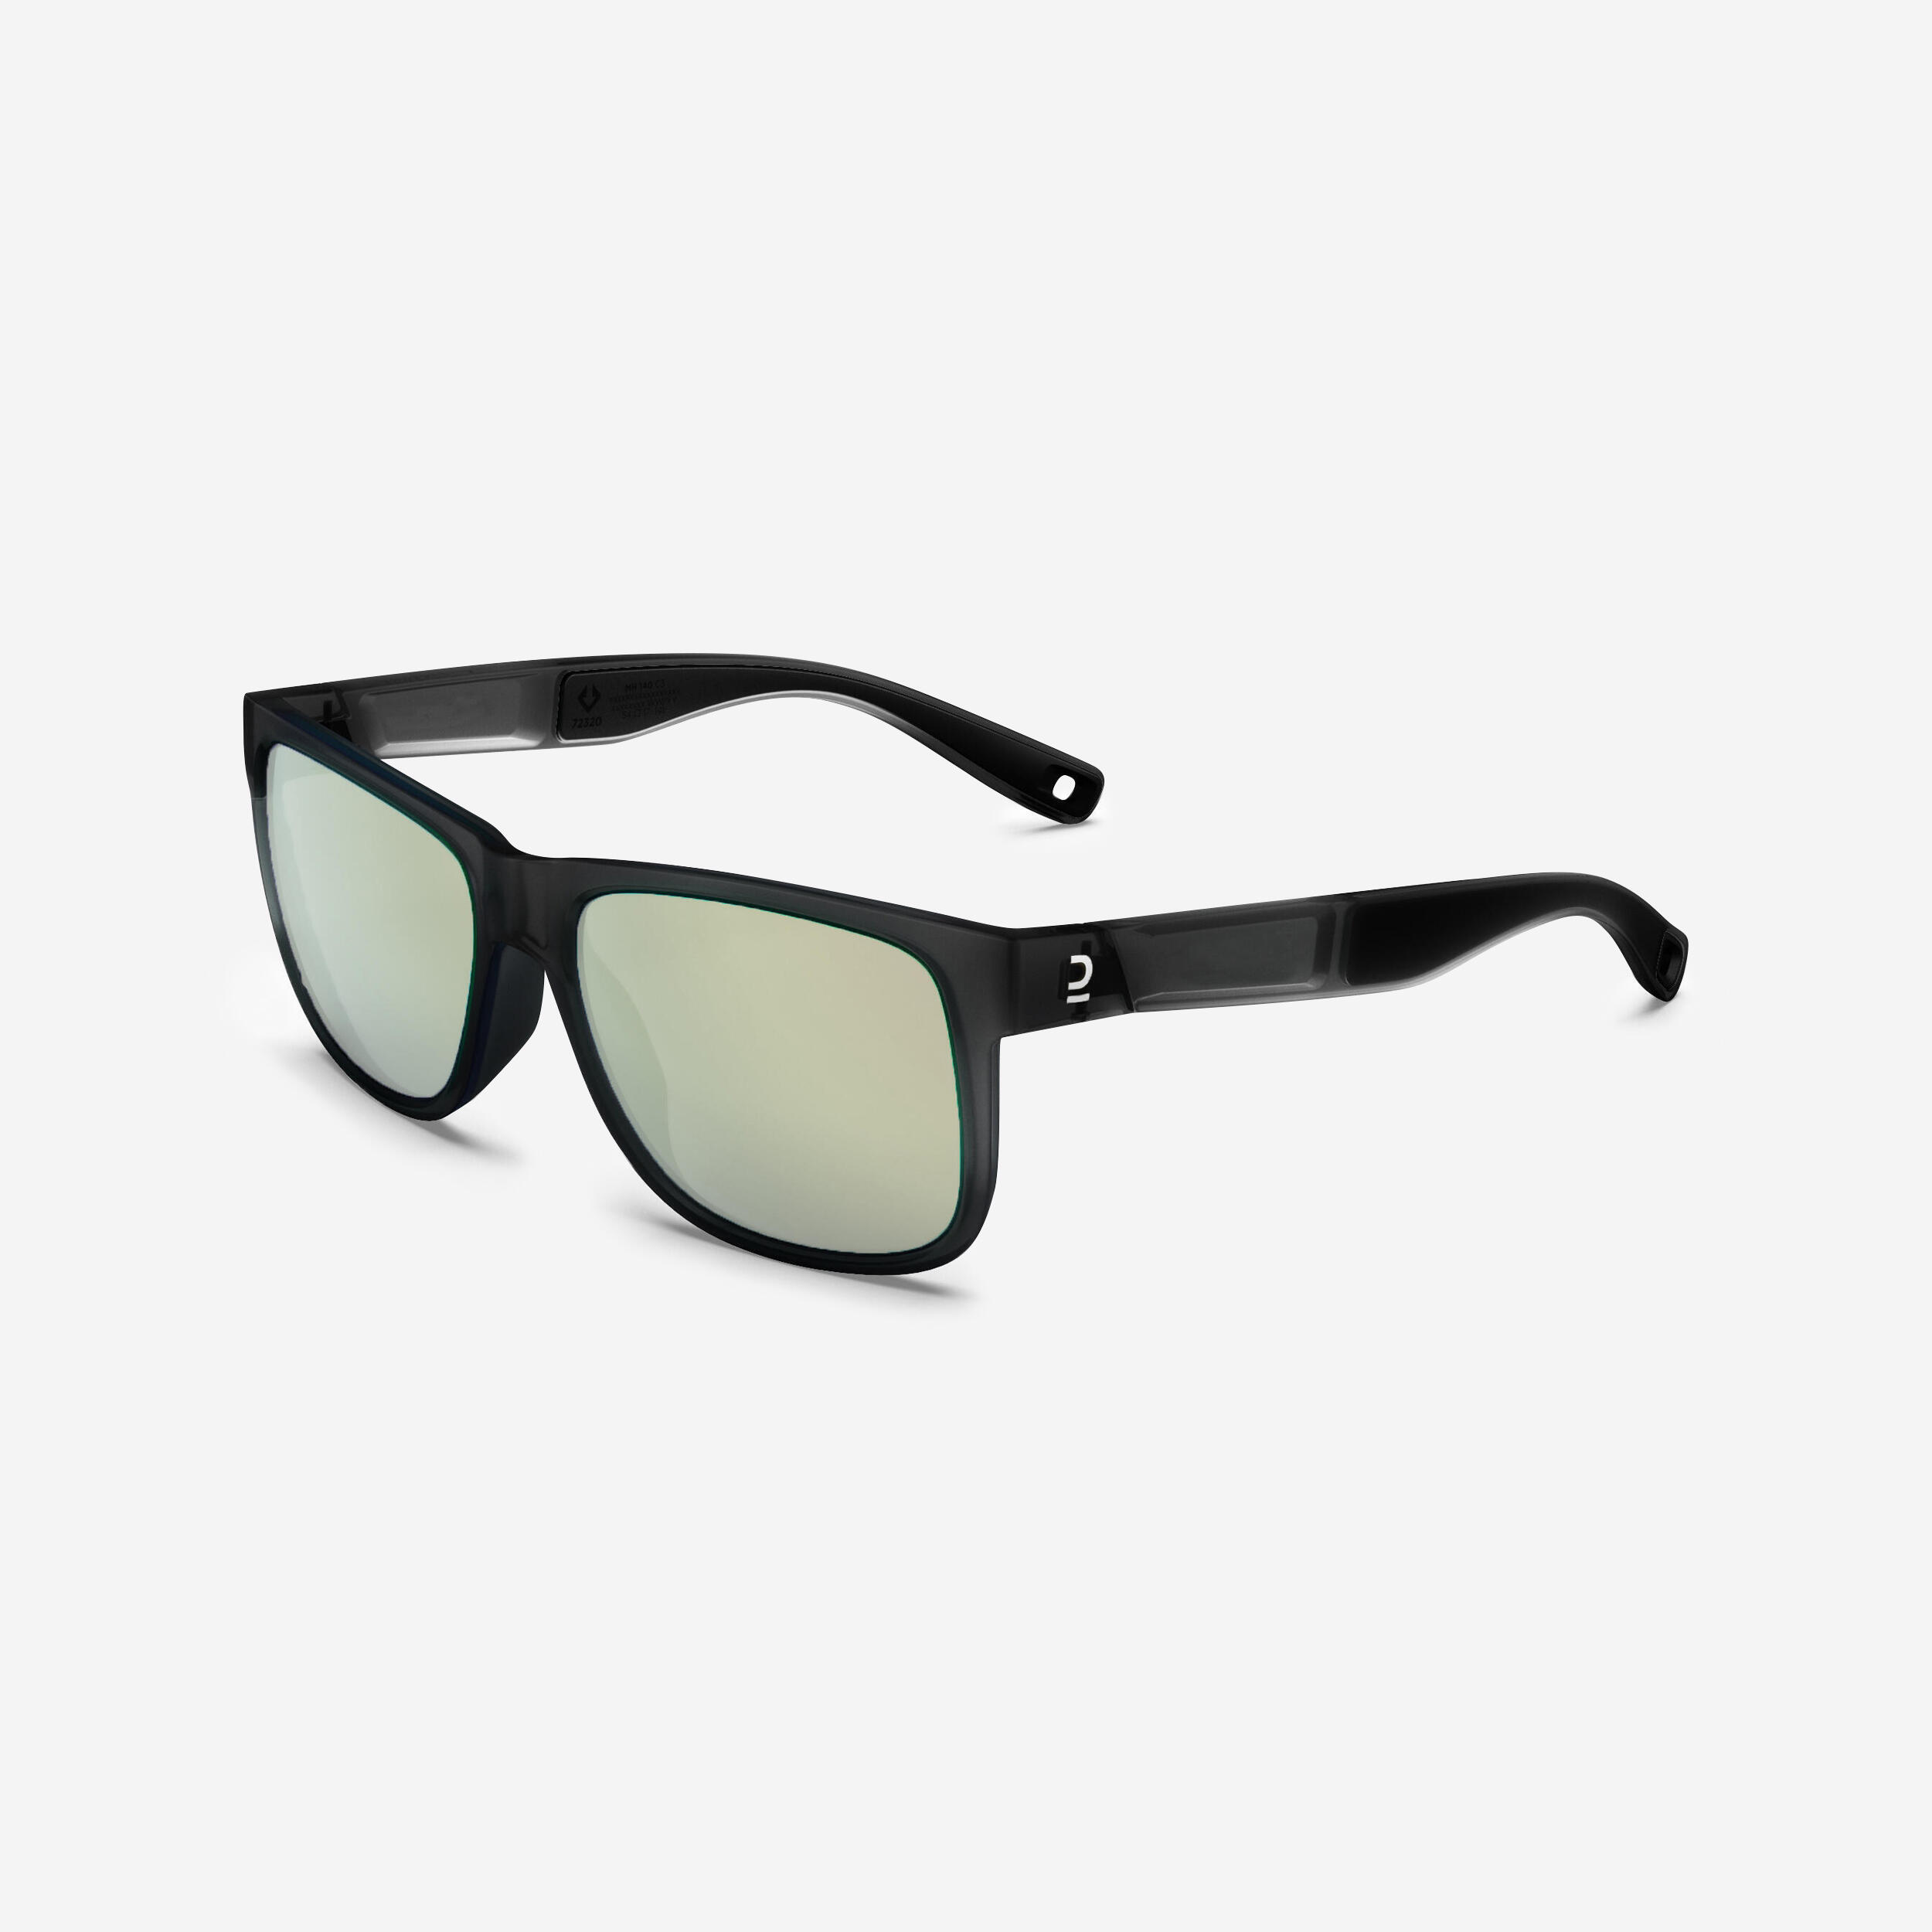 Image of Polarized sunglasses - MH 140